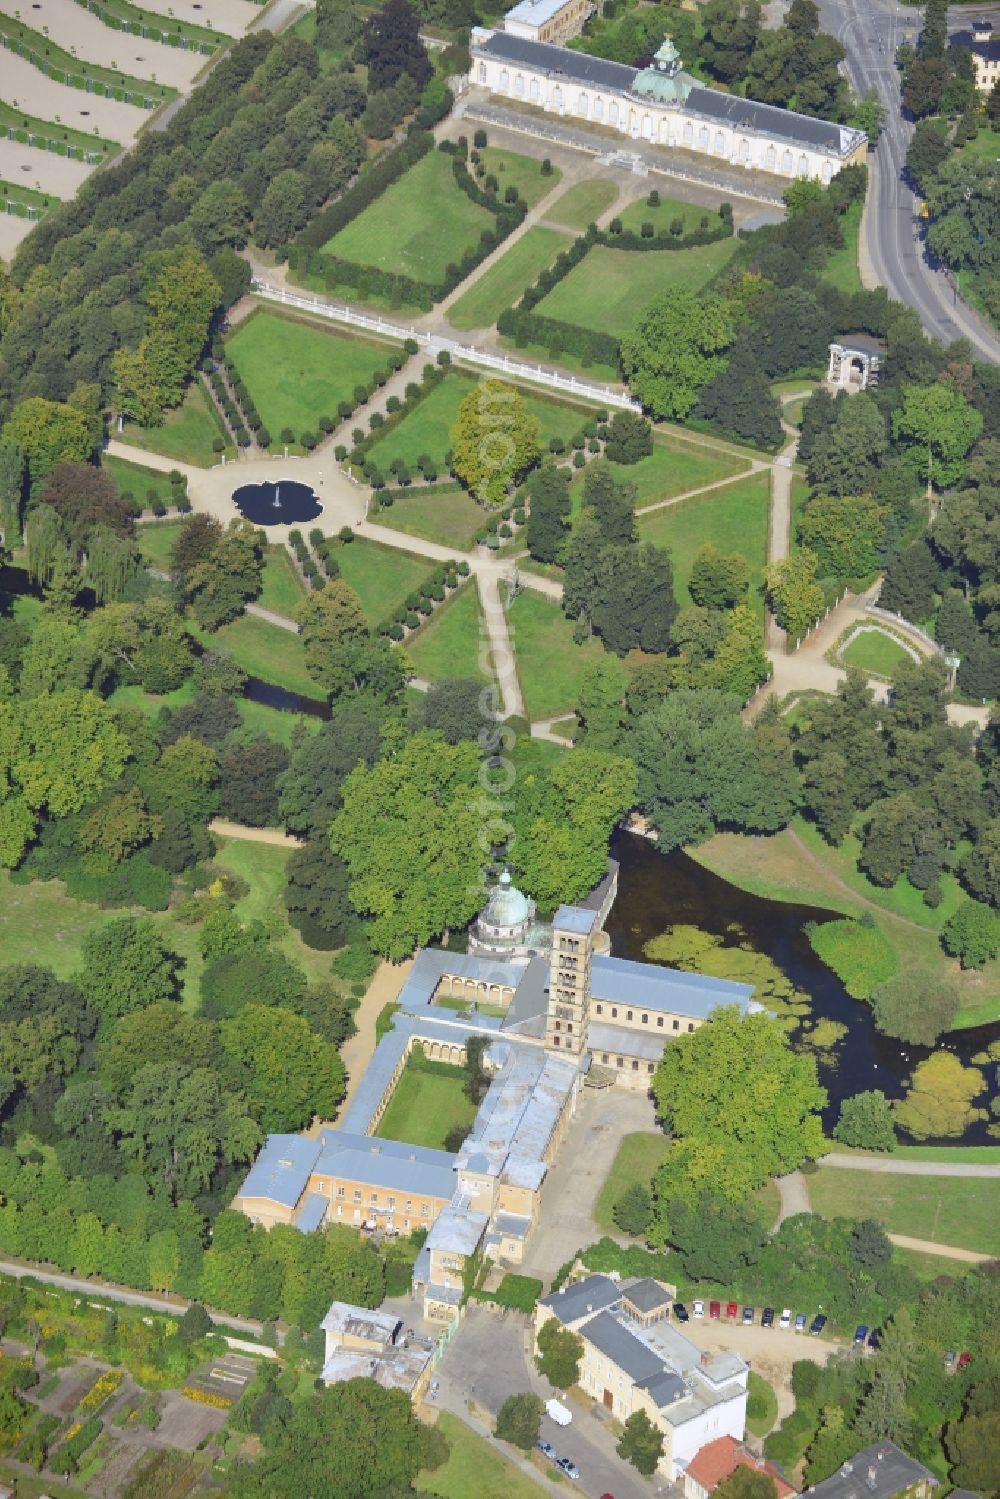 Aerial photograph Potsdam - Castle Sanssouci in Potsdam in Brandenburg